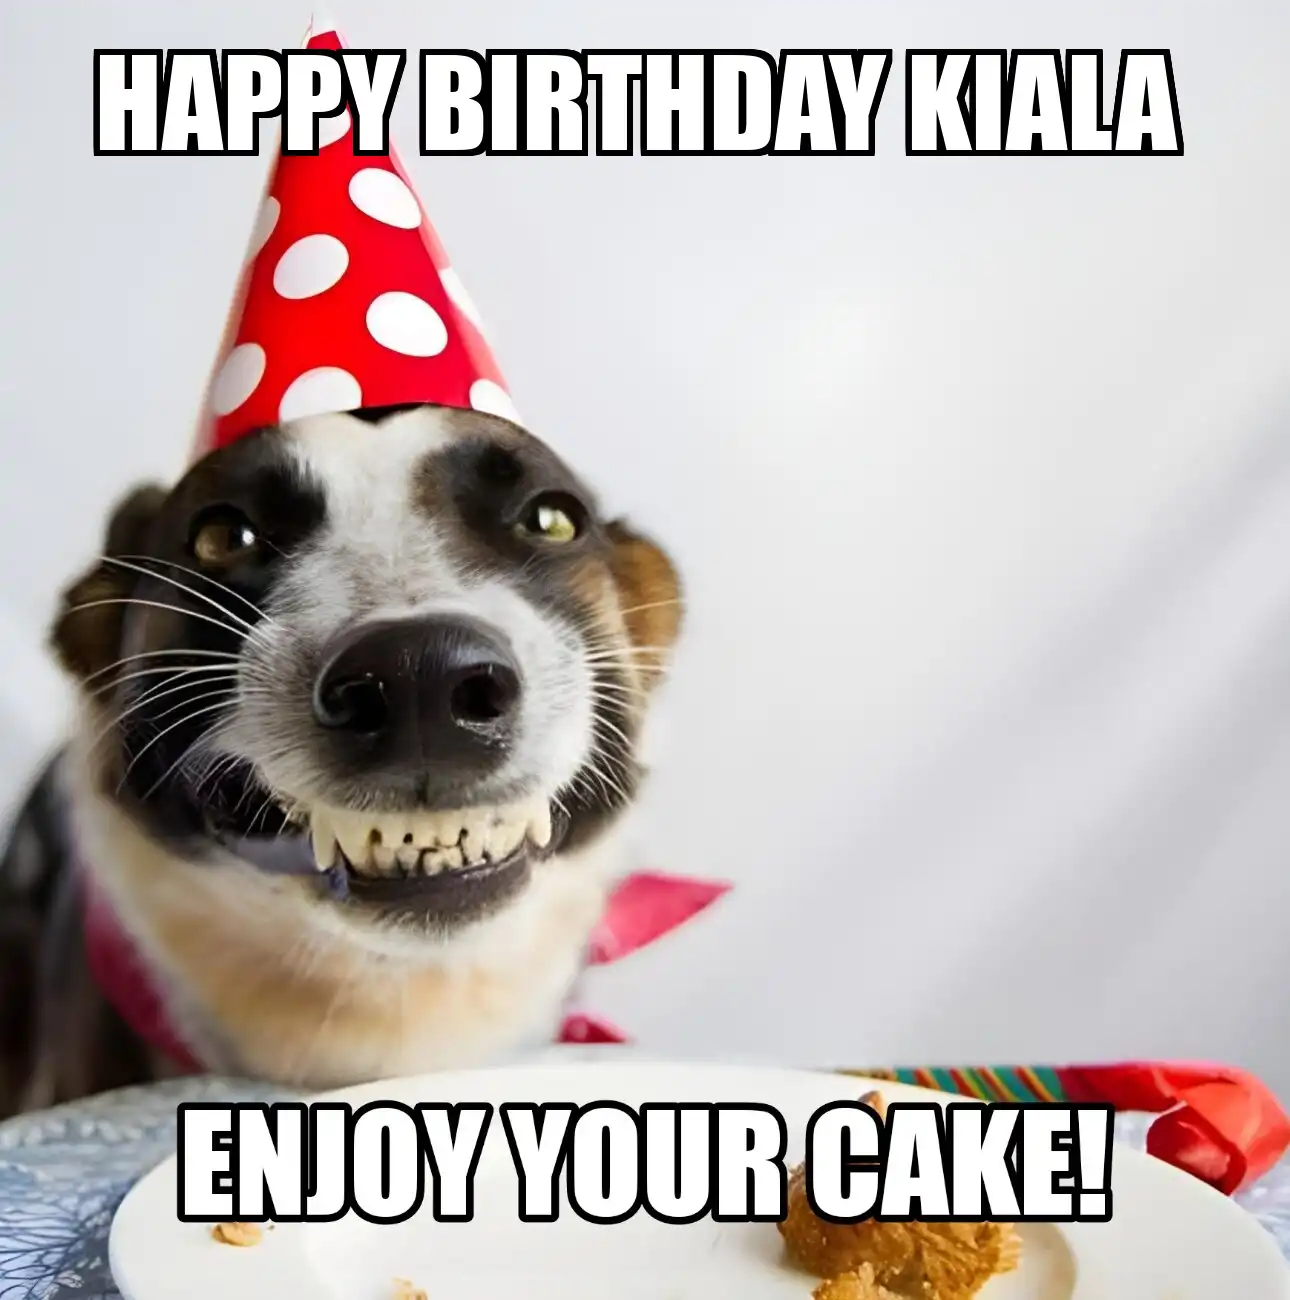 Happy Birthday Kiala Enjoy Your Cake Dog Meme